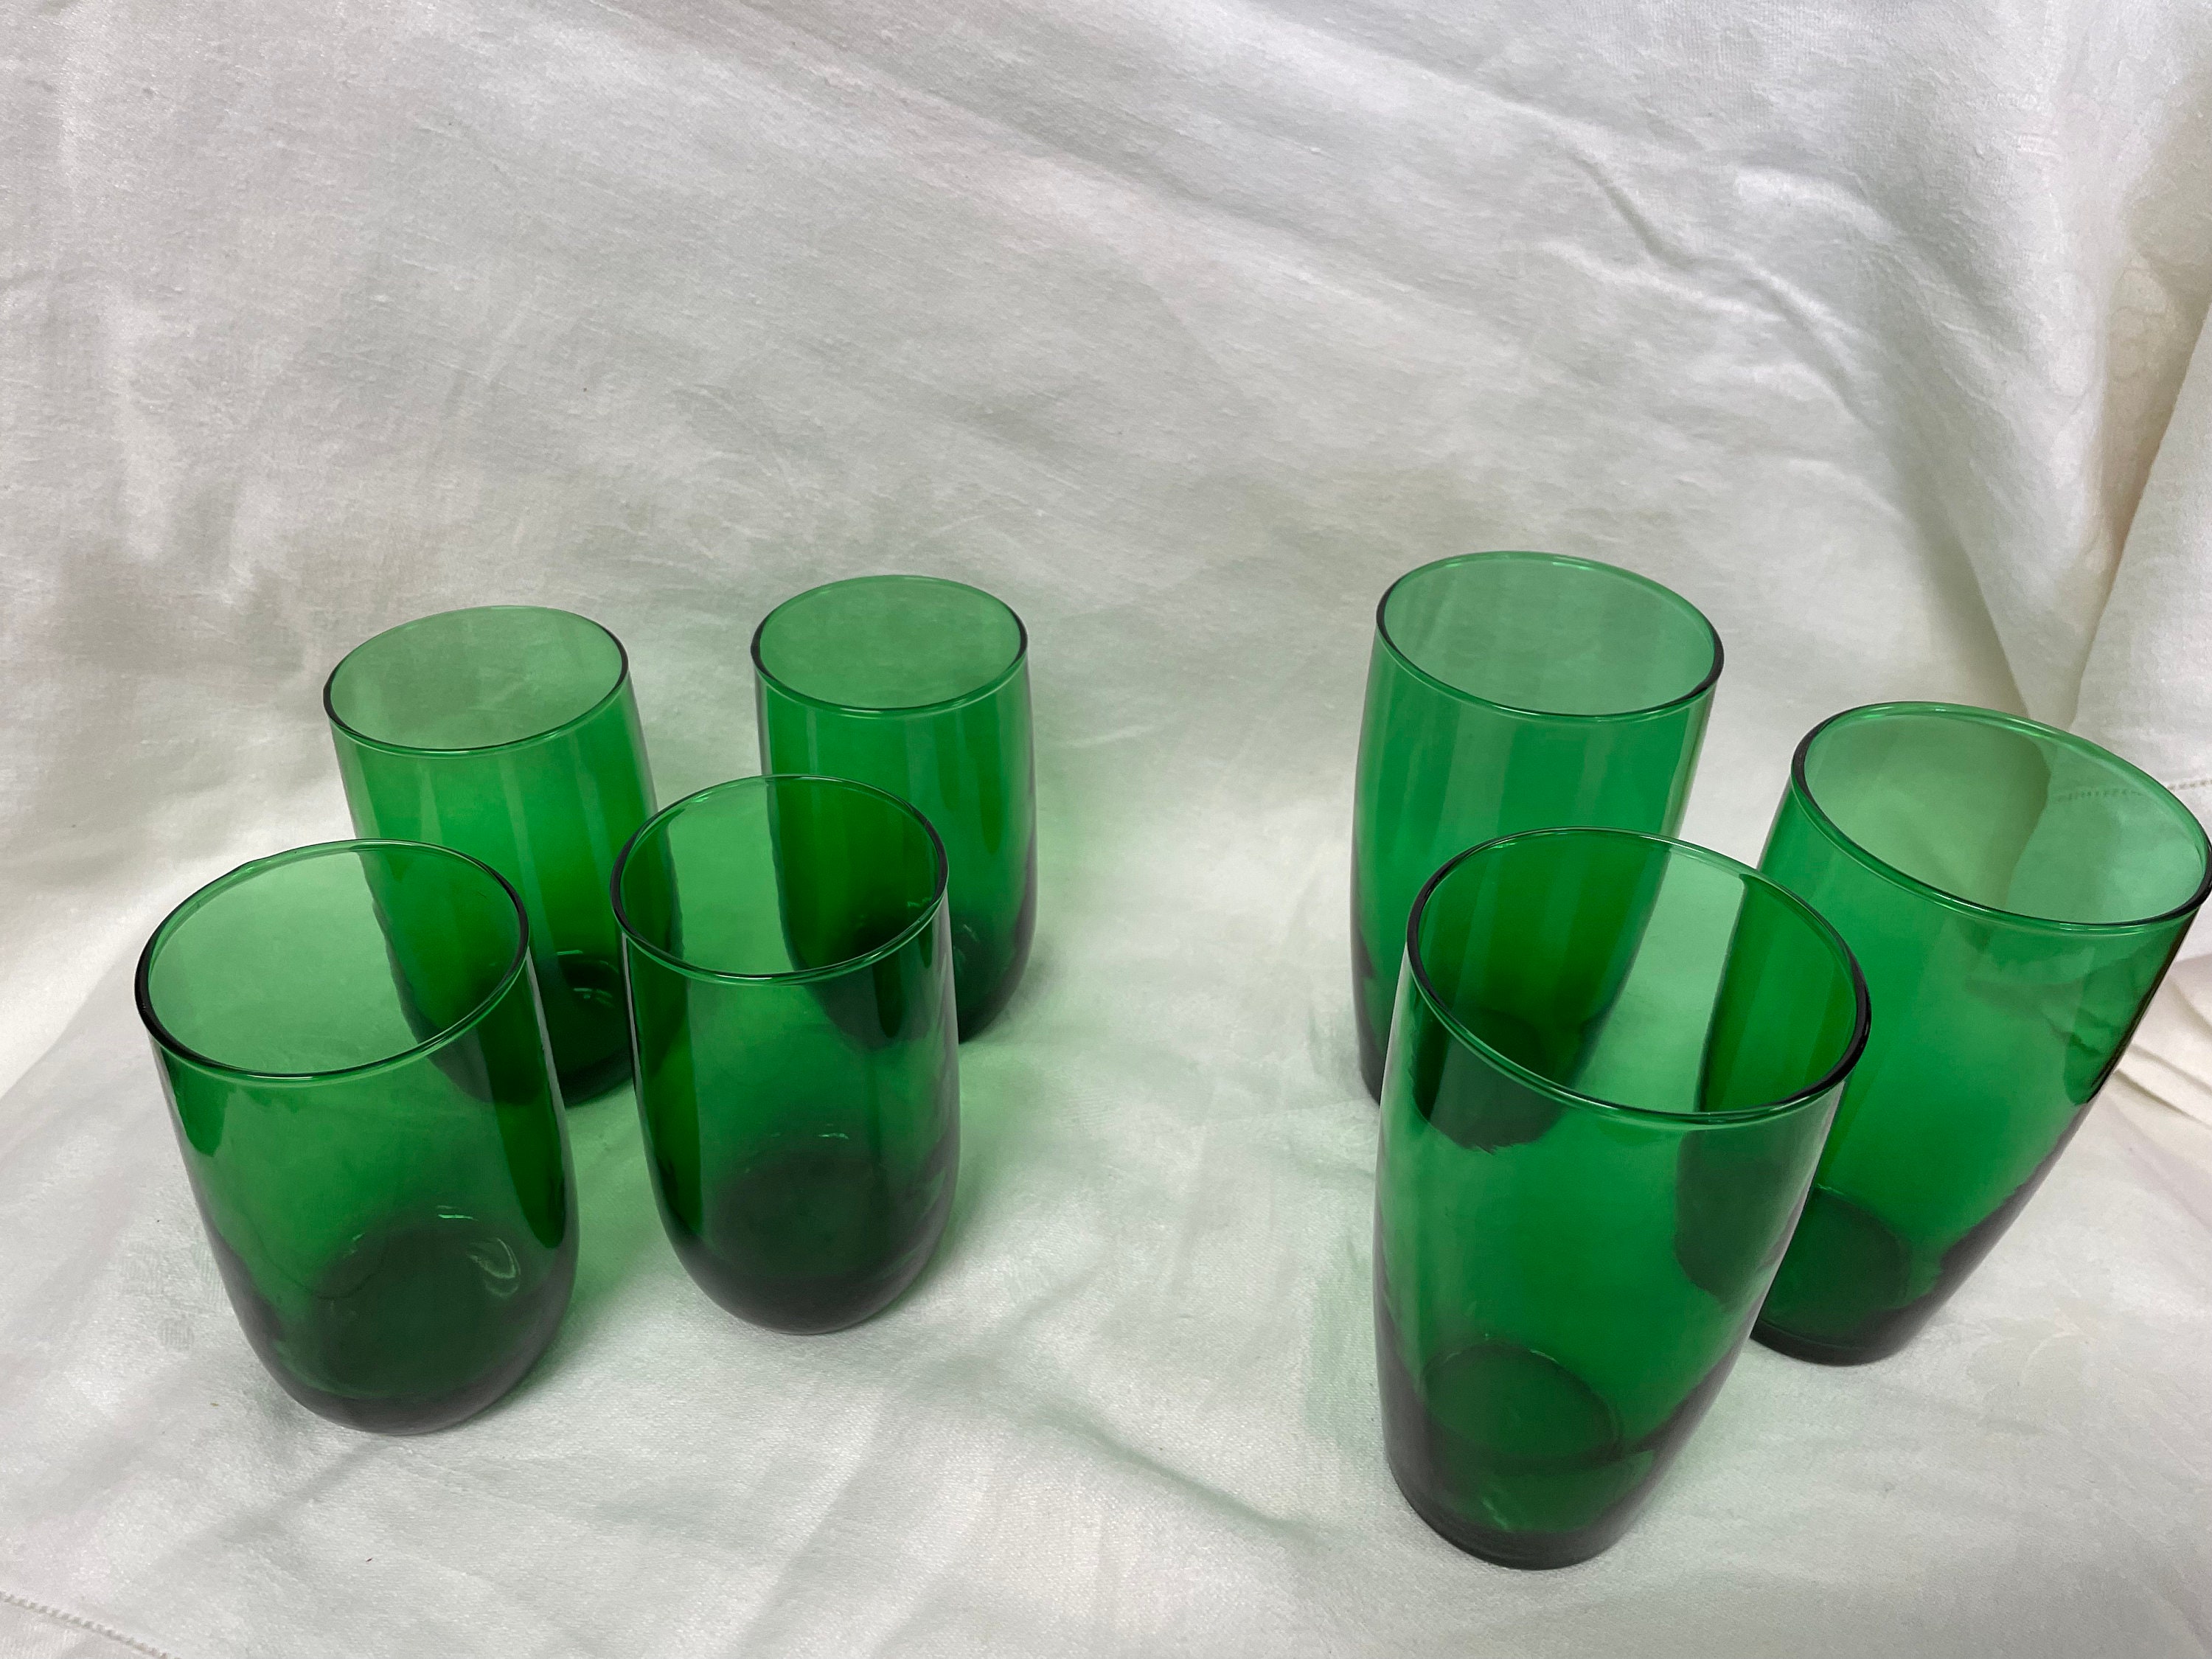 Emerald Modern Glass Cup 350ml